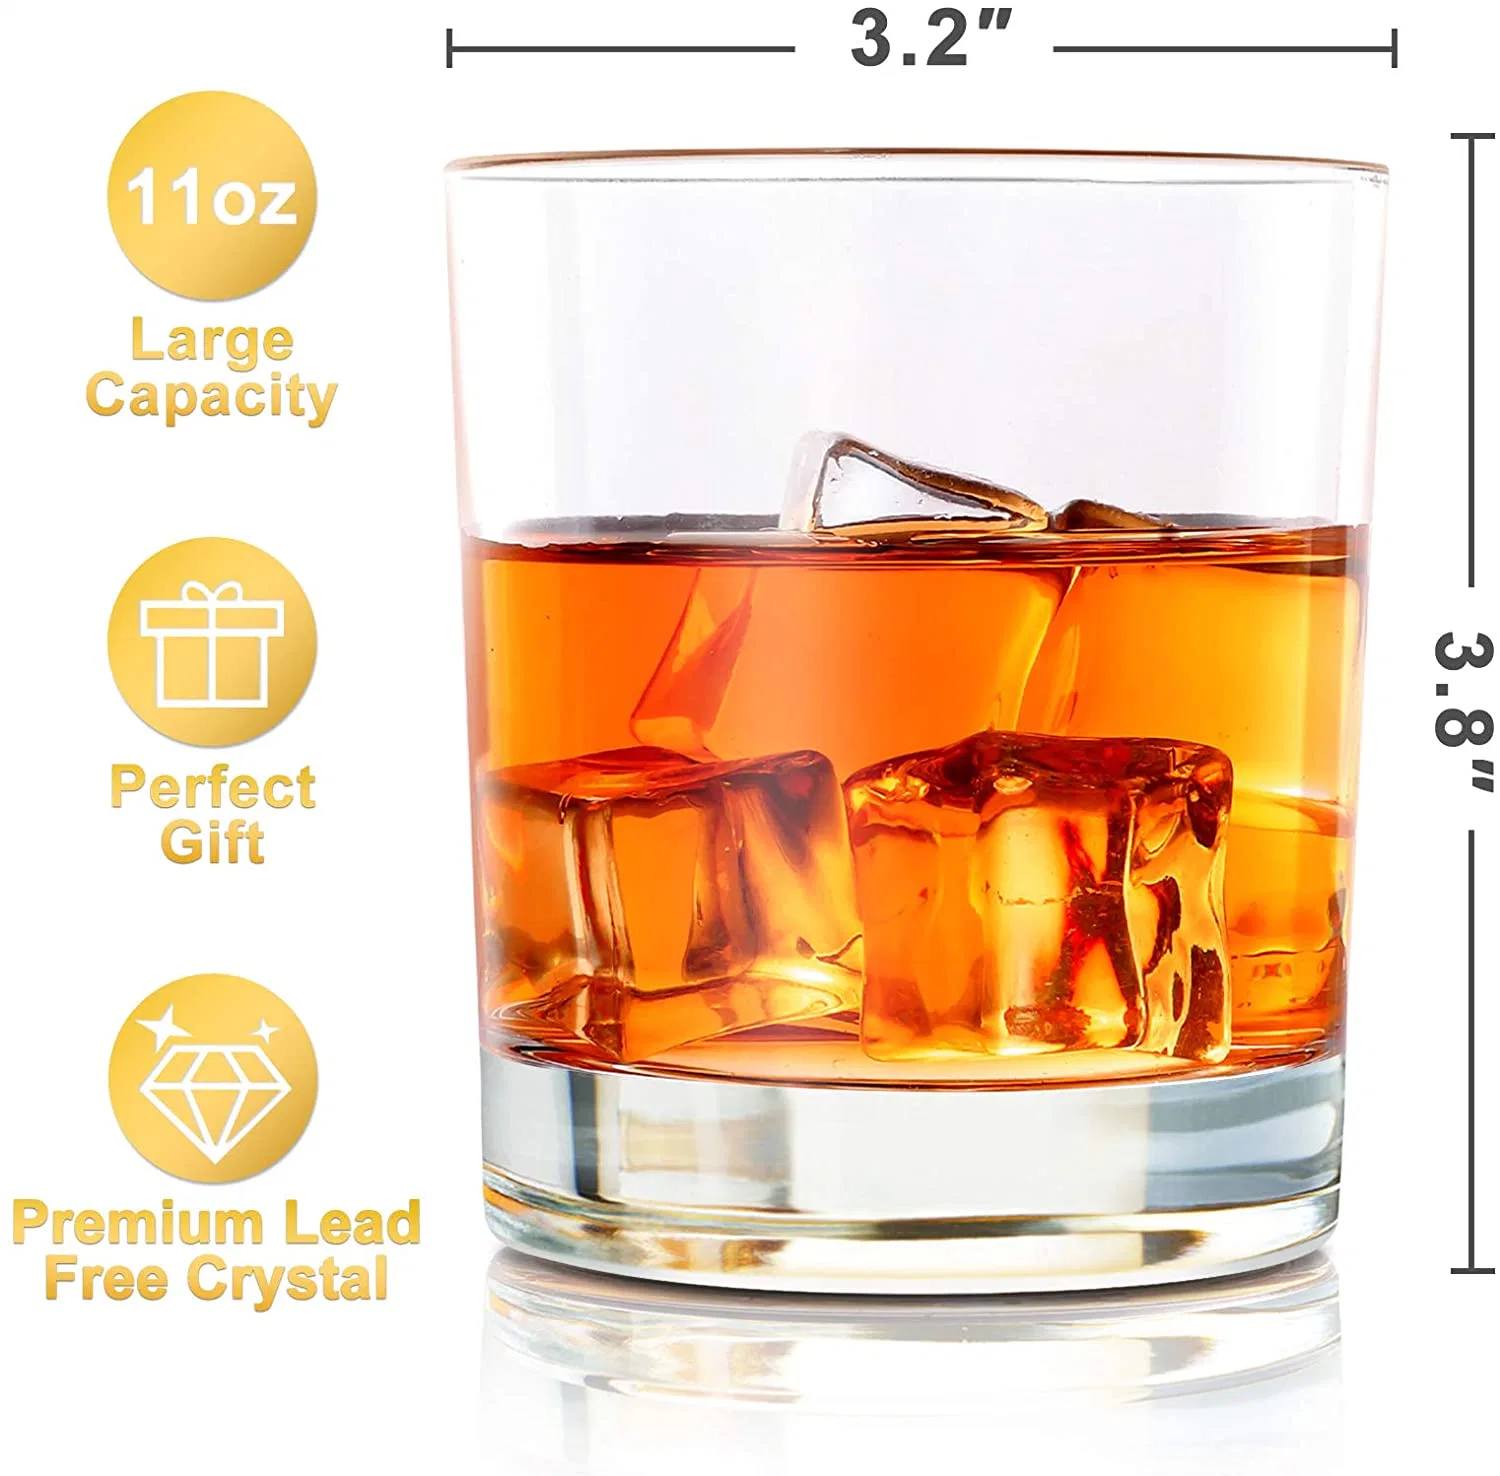 4-11 oz Amazon Premium verres de cristal Old Fashioned Wine Tumbler verre de Whisky